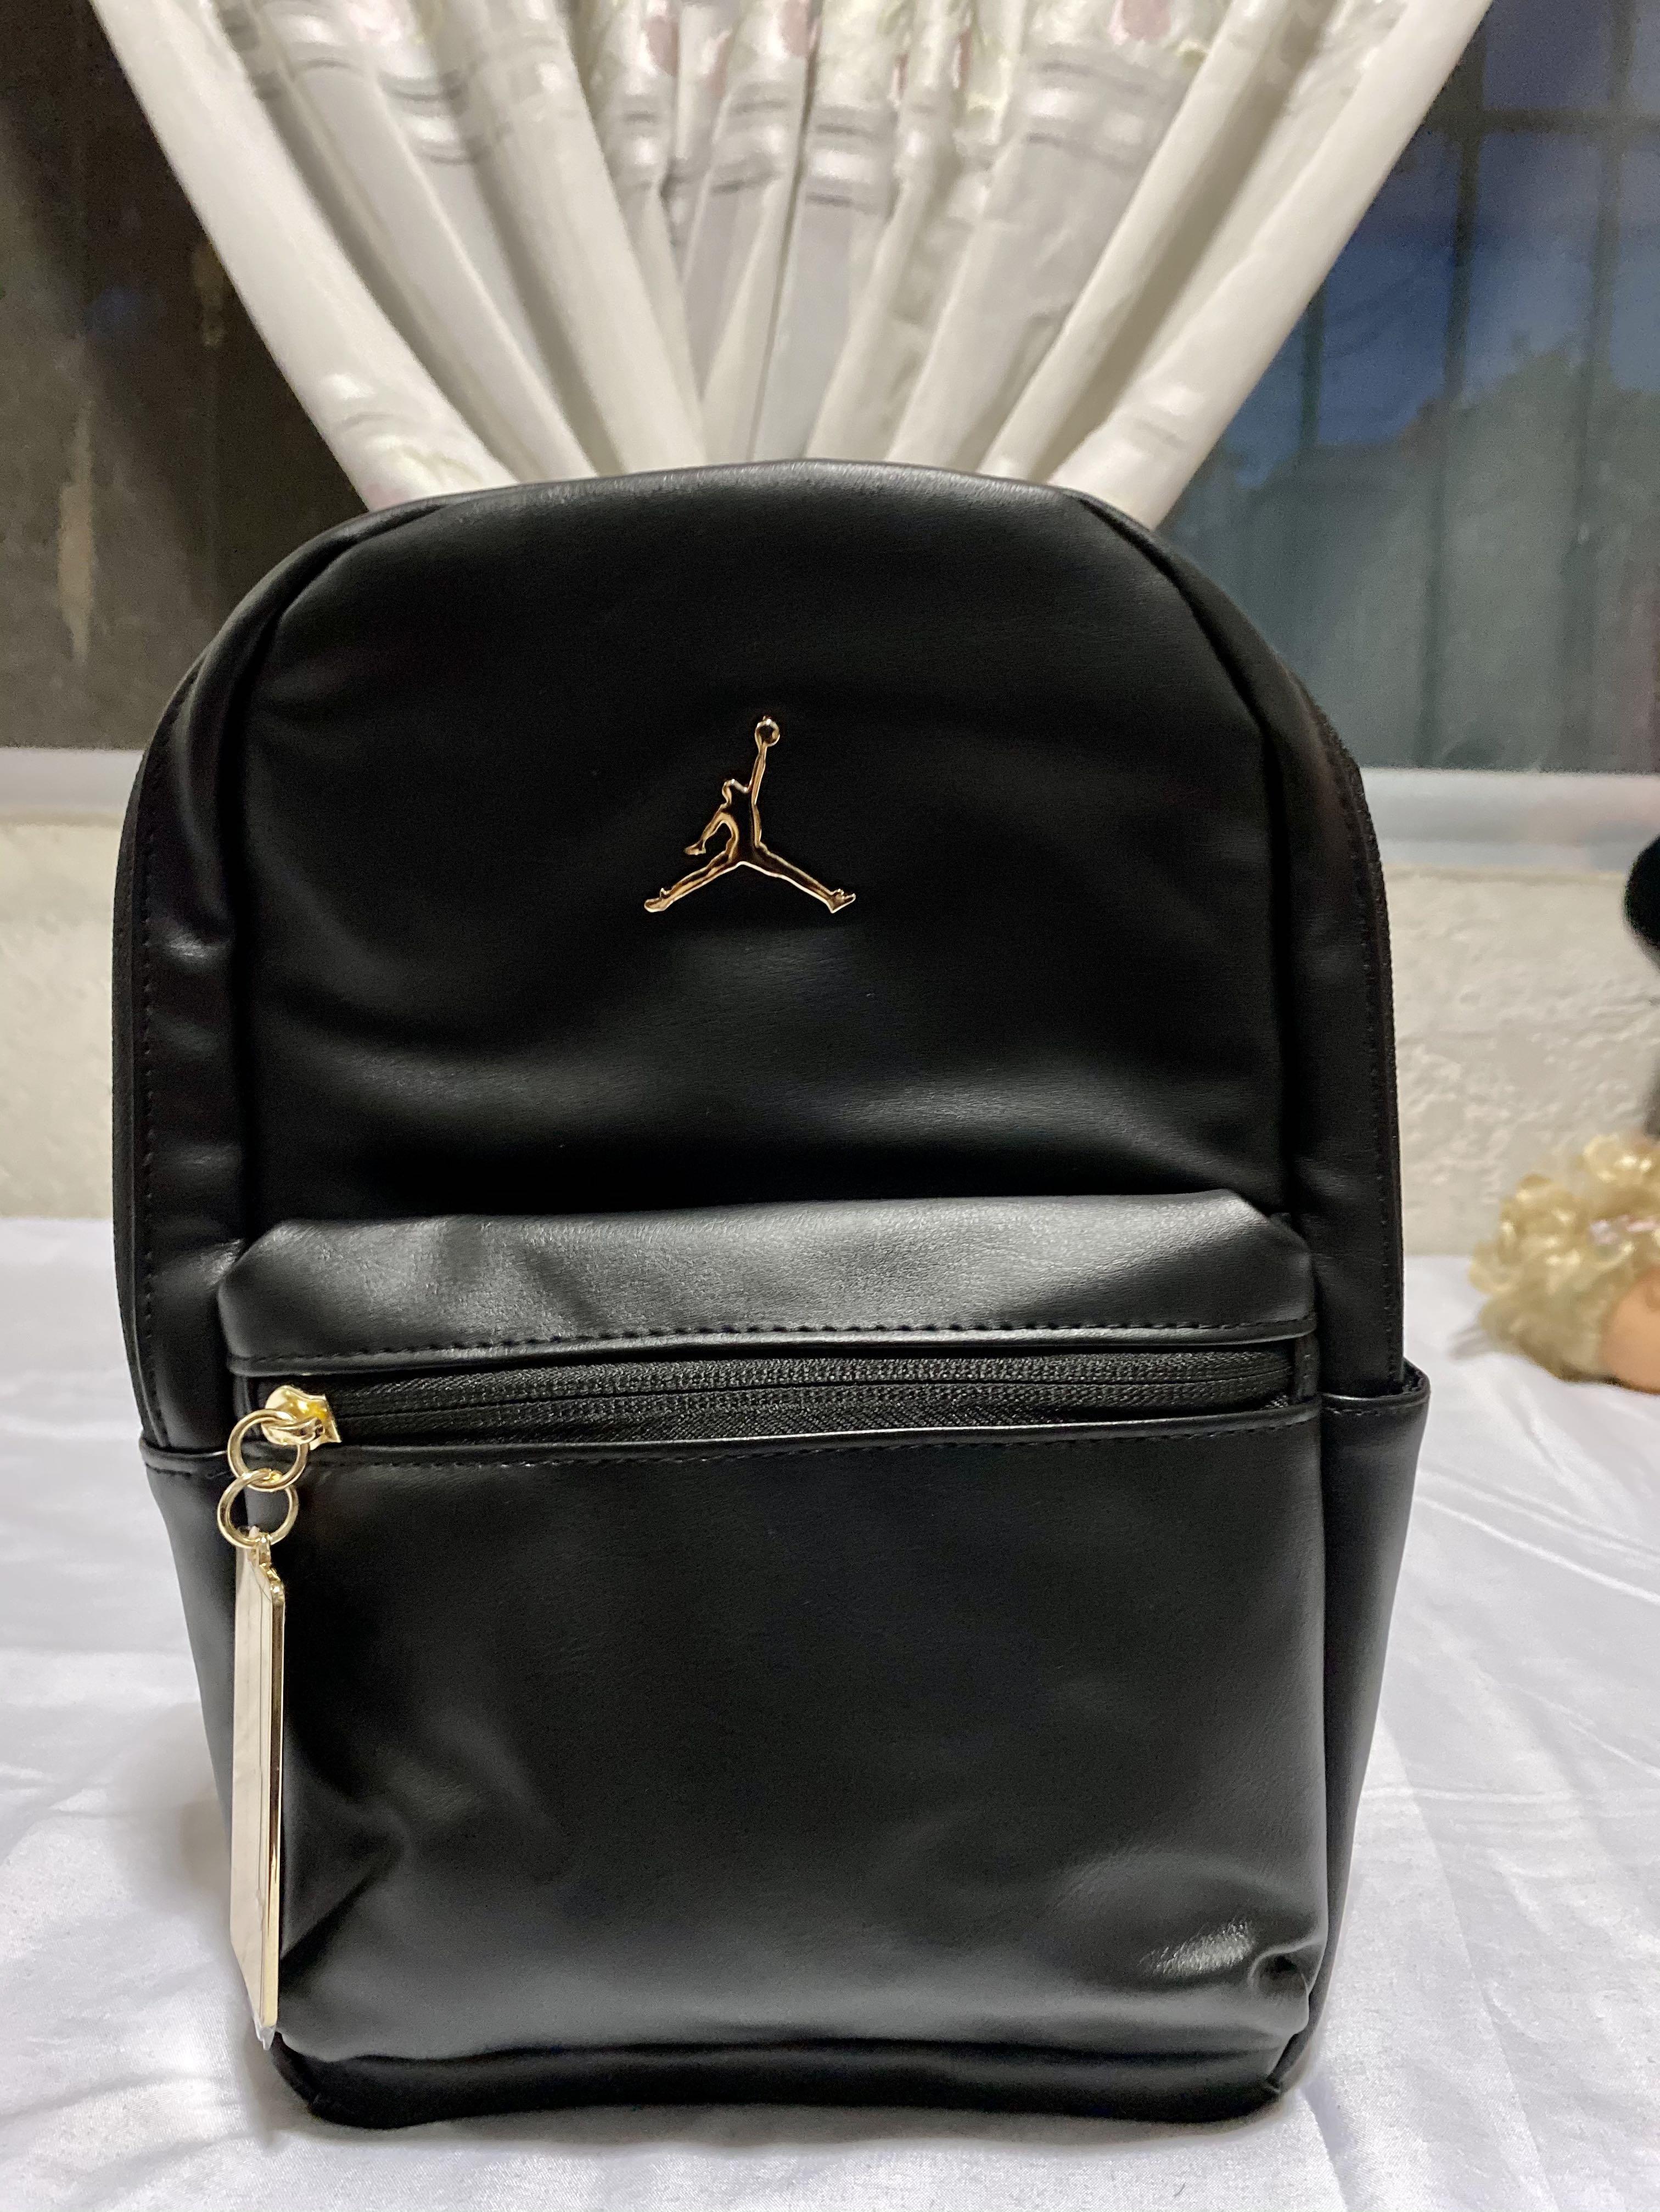 jordan backpack women's